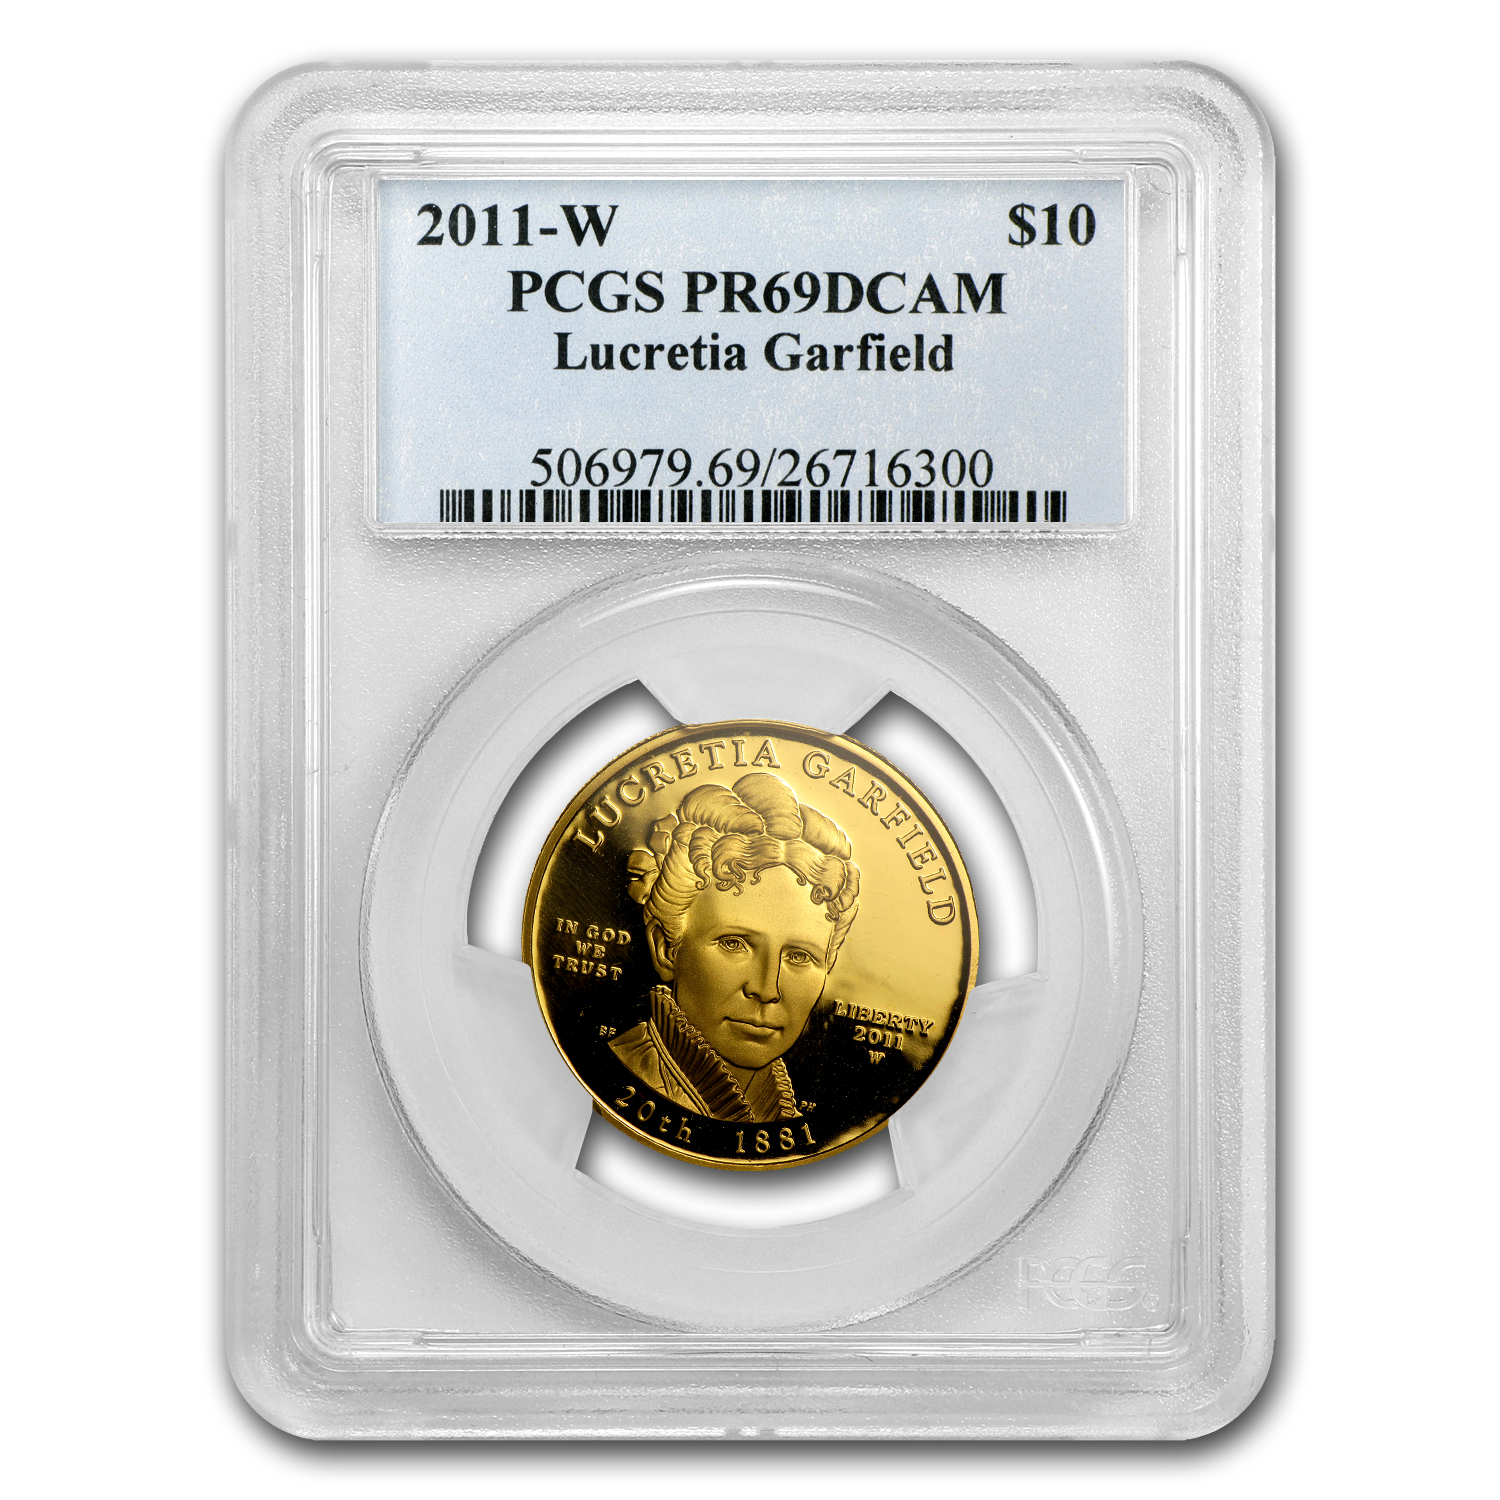 Buy 2011-W 1/2 oz Proof Gold Lucretia Garfield PR-69 PCGS